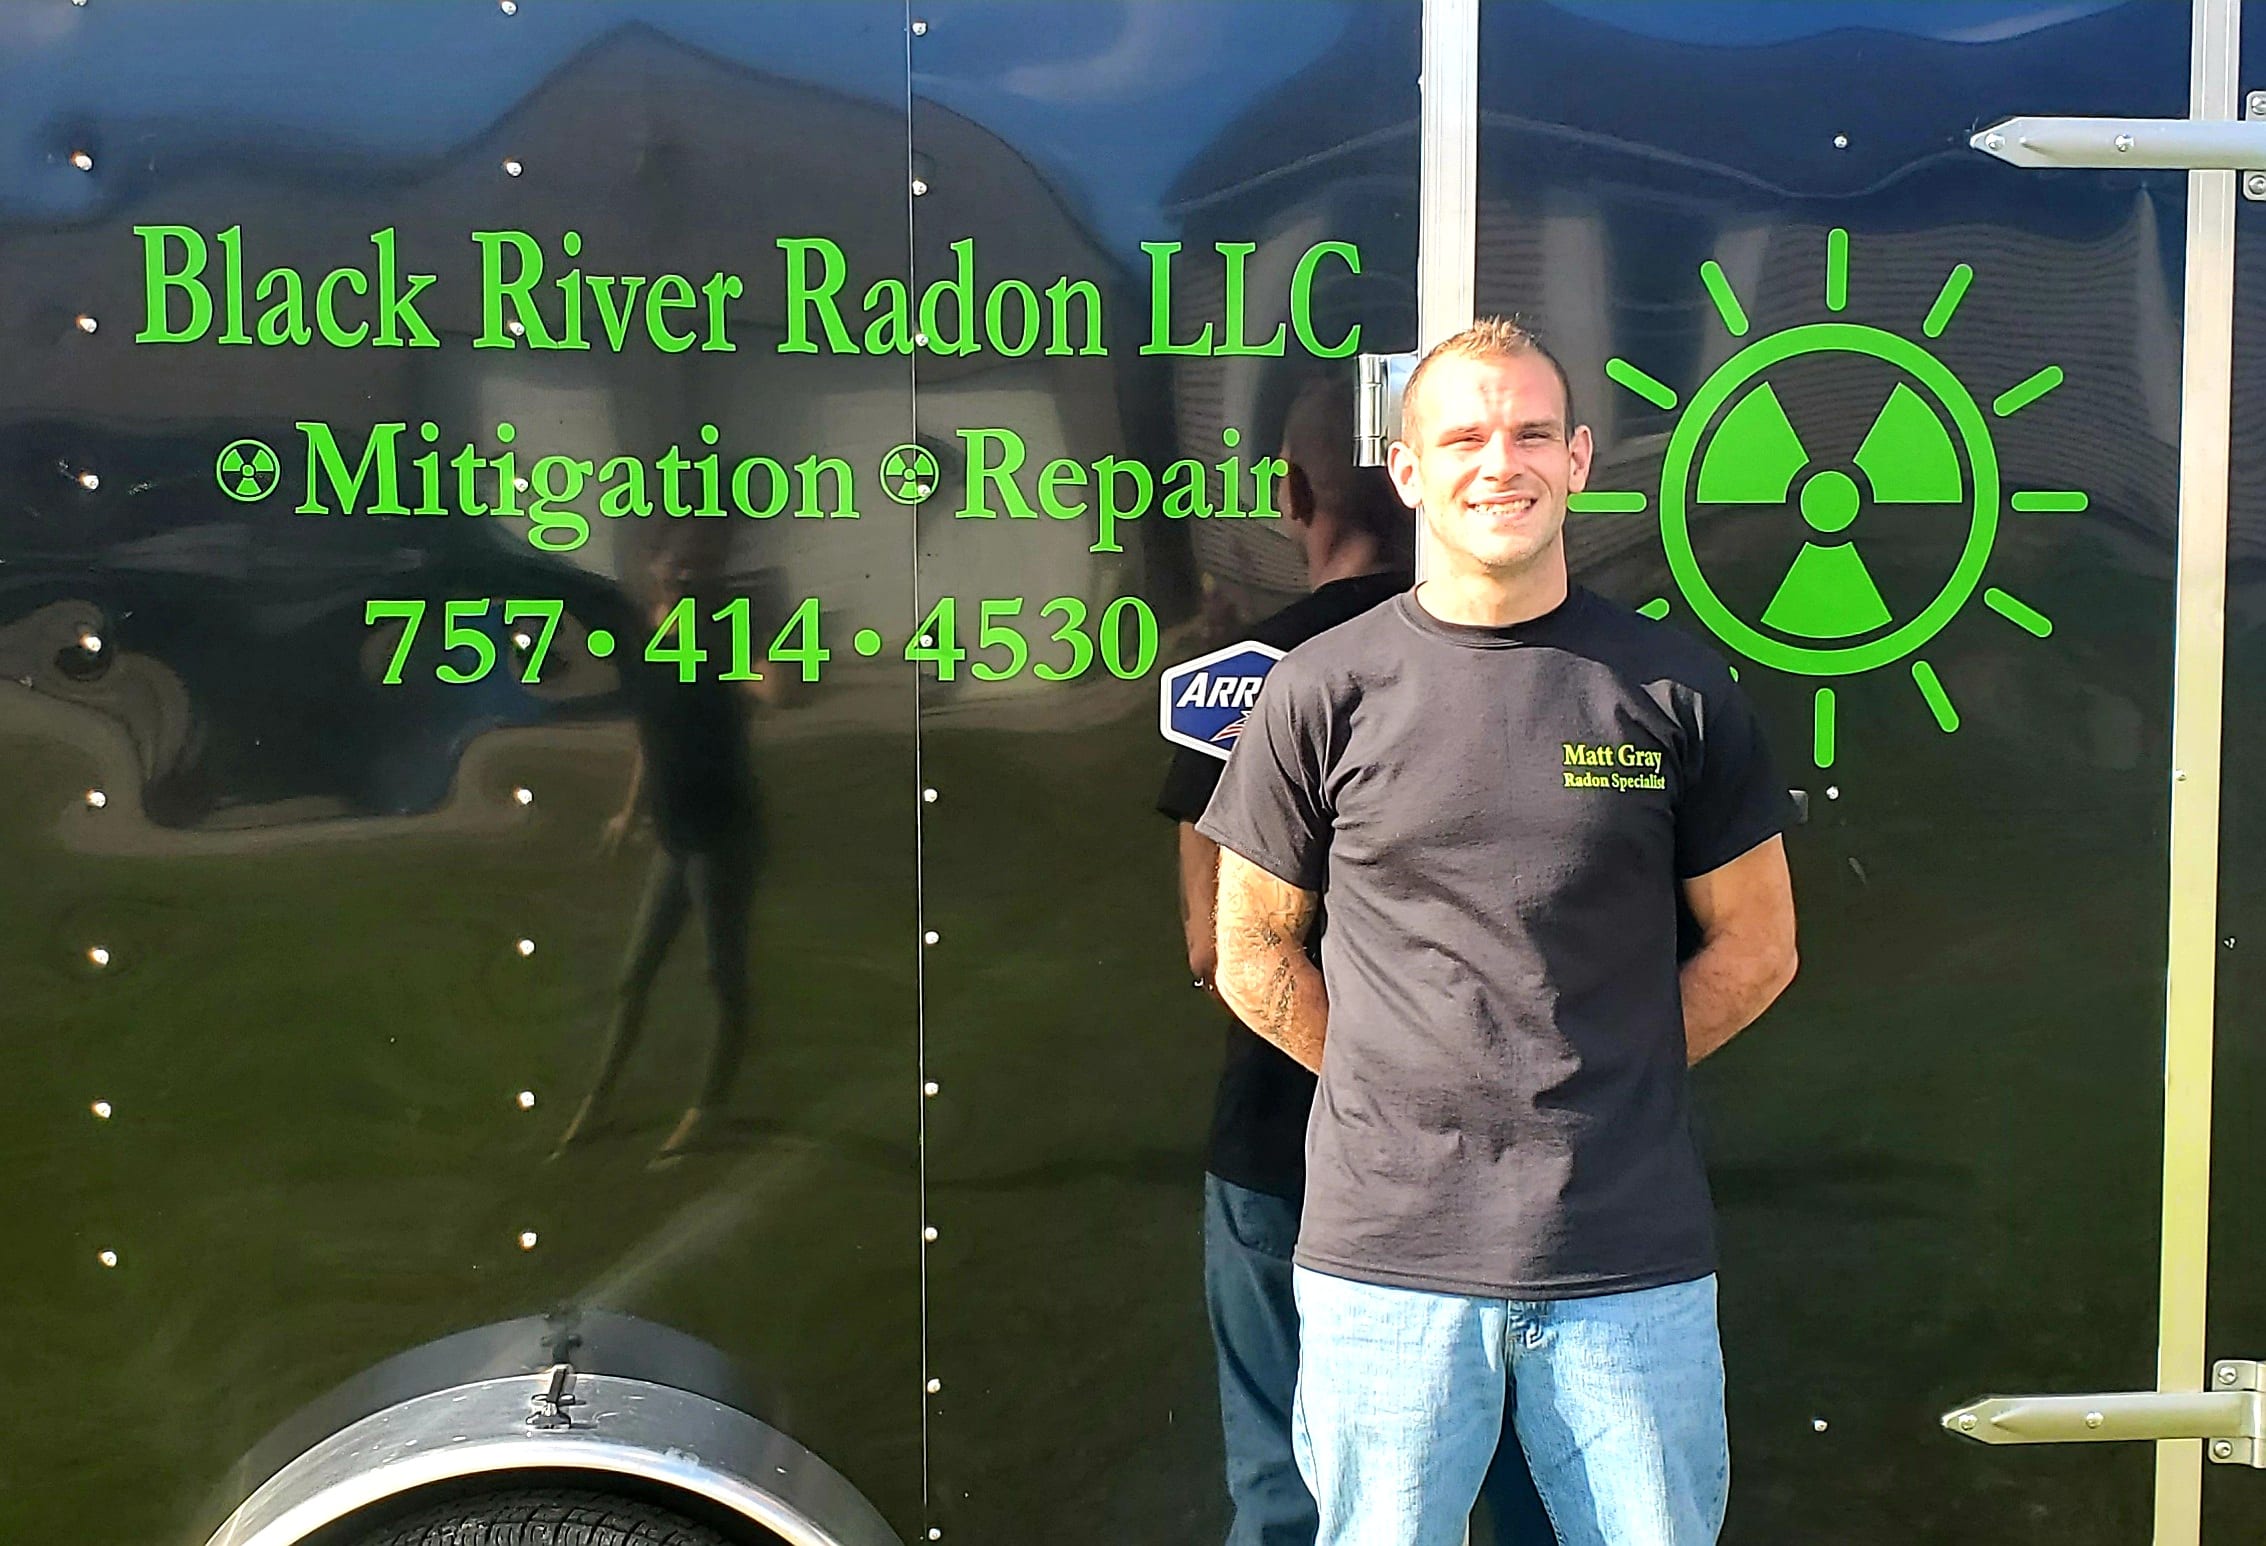 Matthew Gray in front of radon company trailer